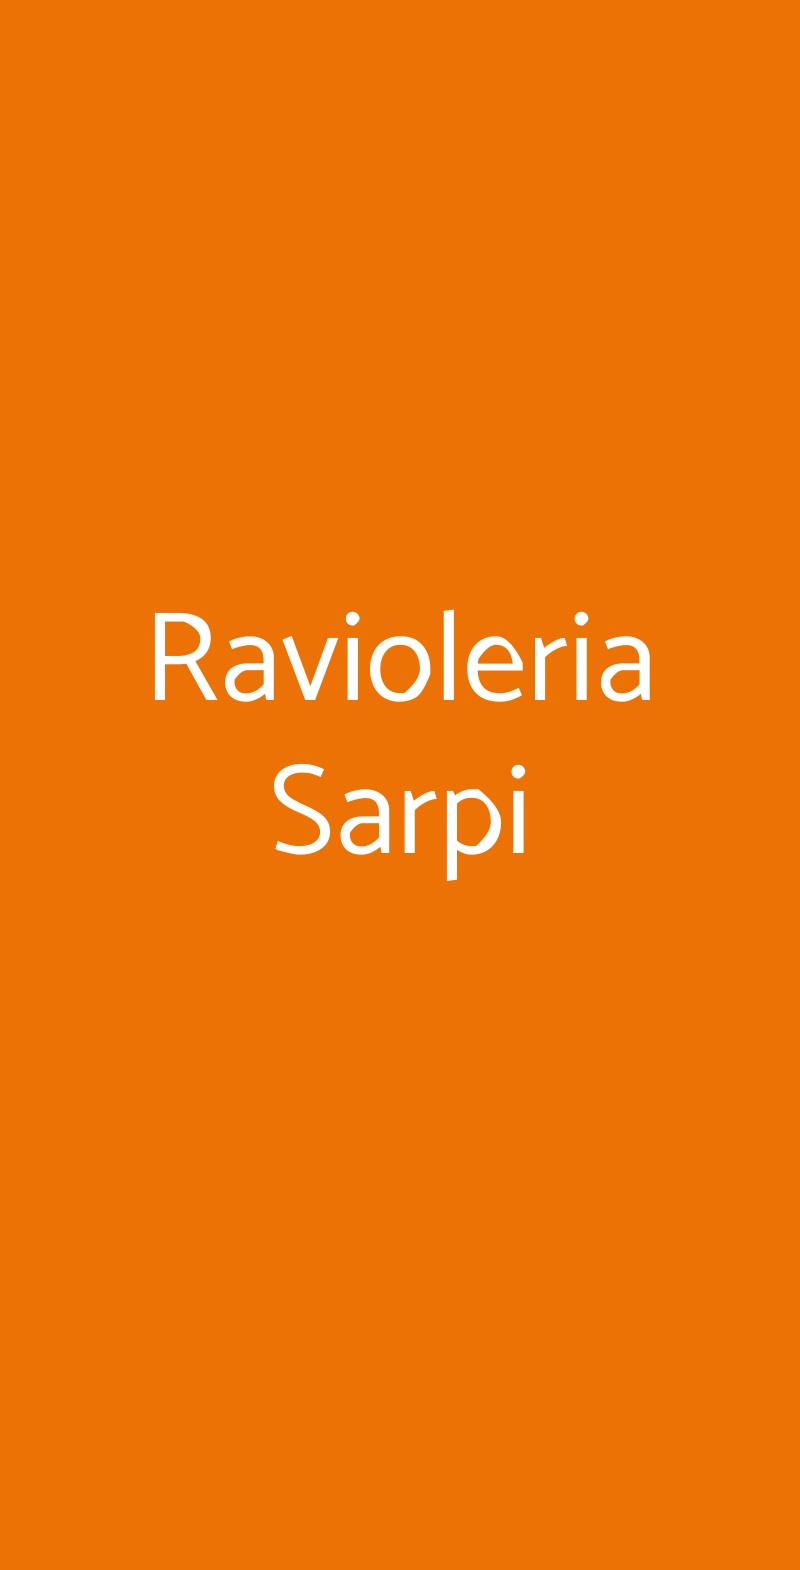 Ravioleria Sarpi Milano menù 1 pagina